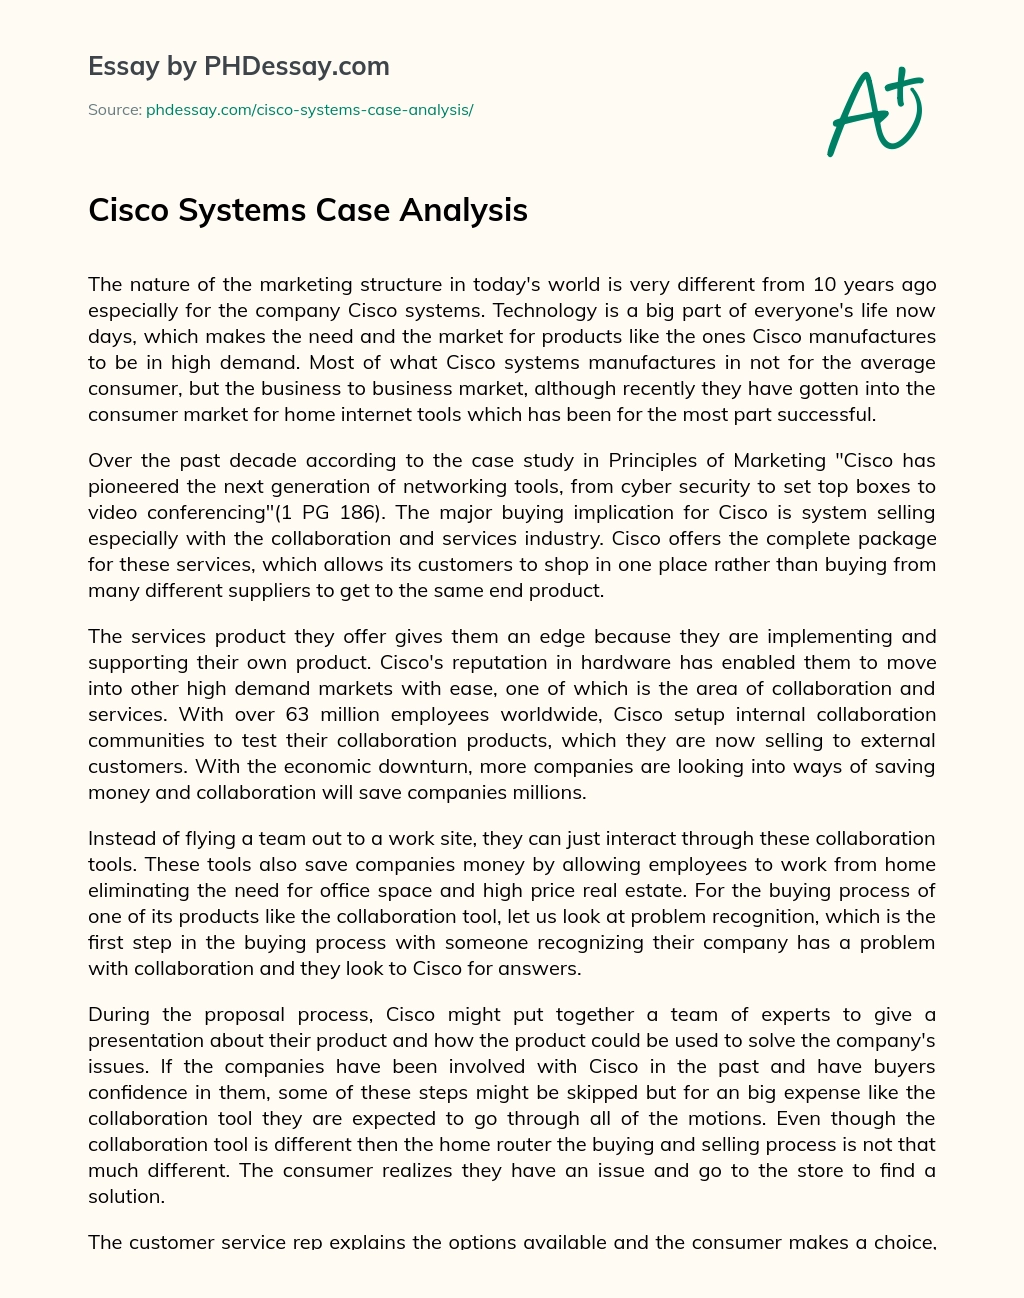 Cisco Systems Case Analysis essay